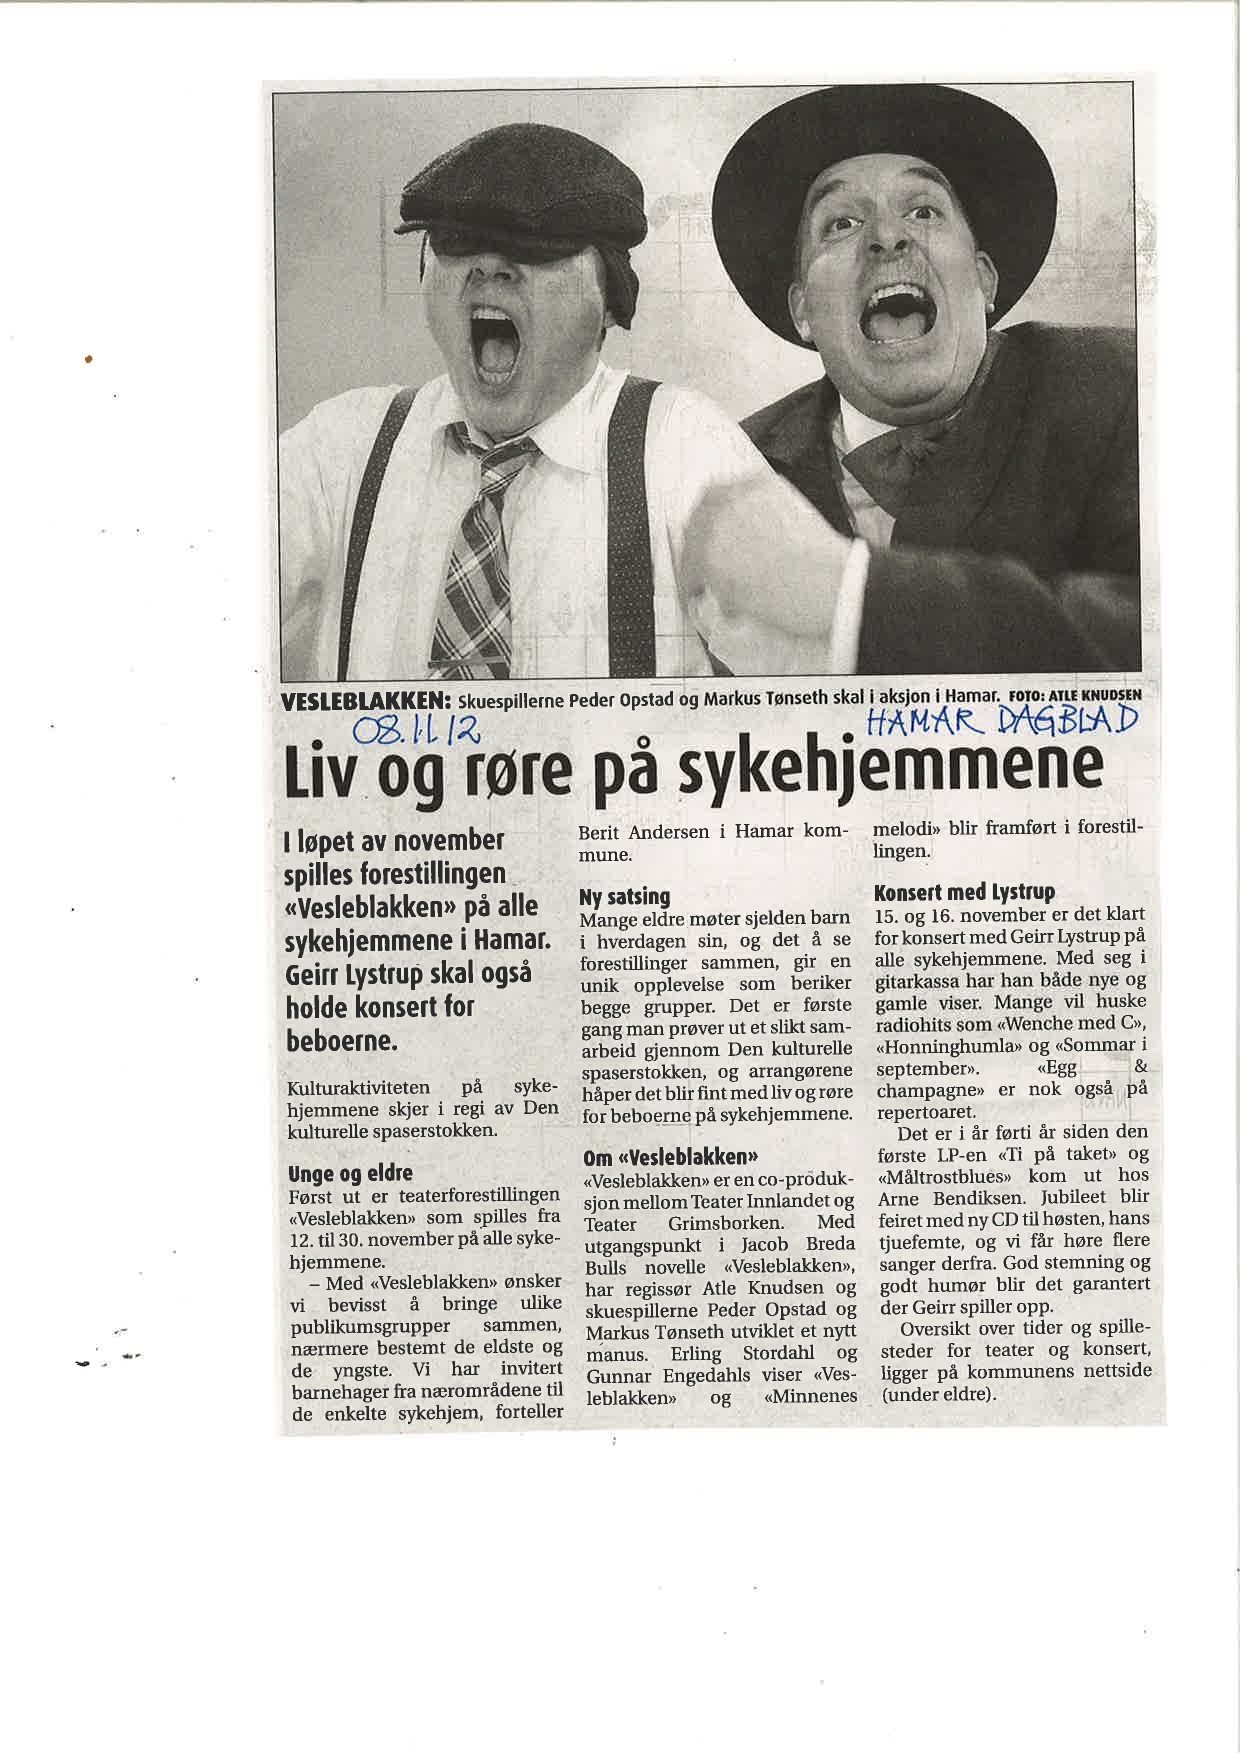 Nov 08 2012 Hamar Dagblad.jpg